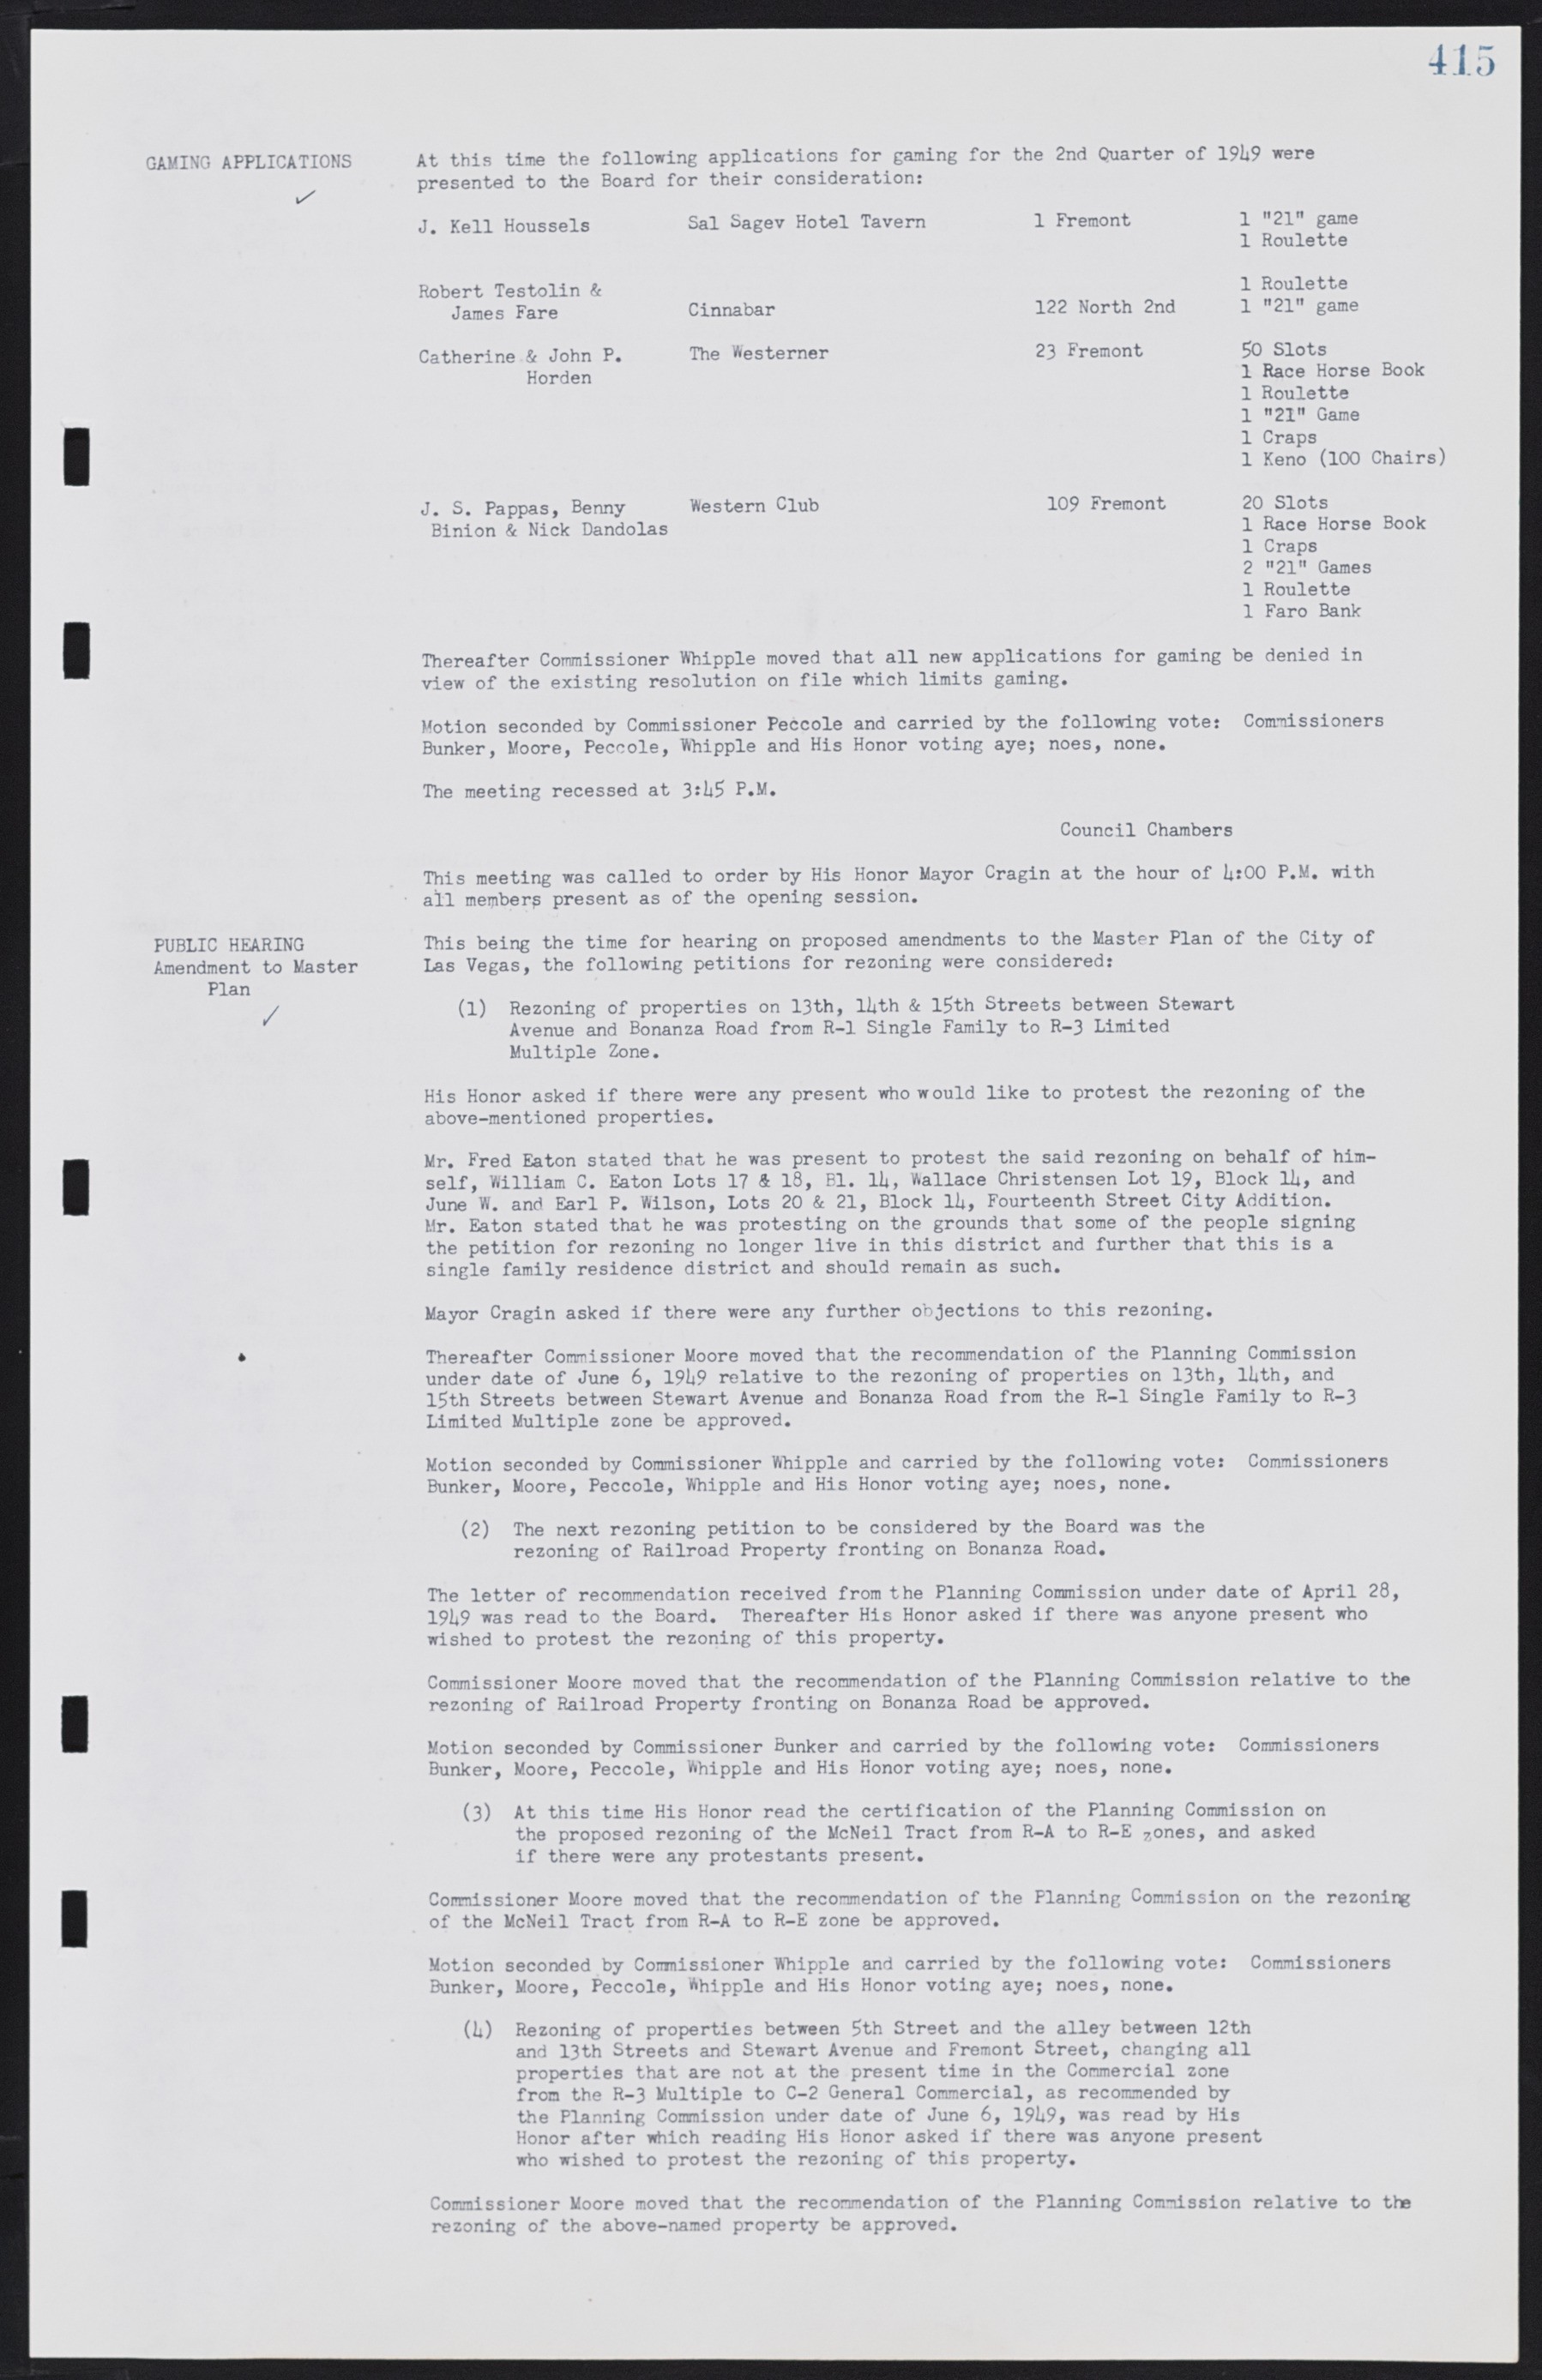 Las Vegas City Commission Minutes, January 7, 1947 to October 26, 1949, lvc000006-445